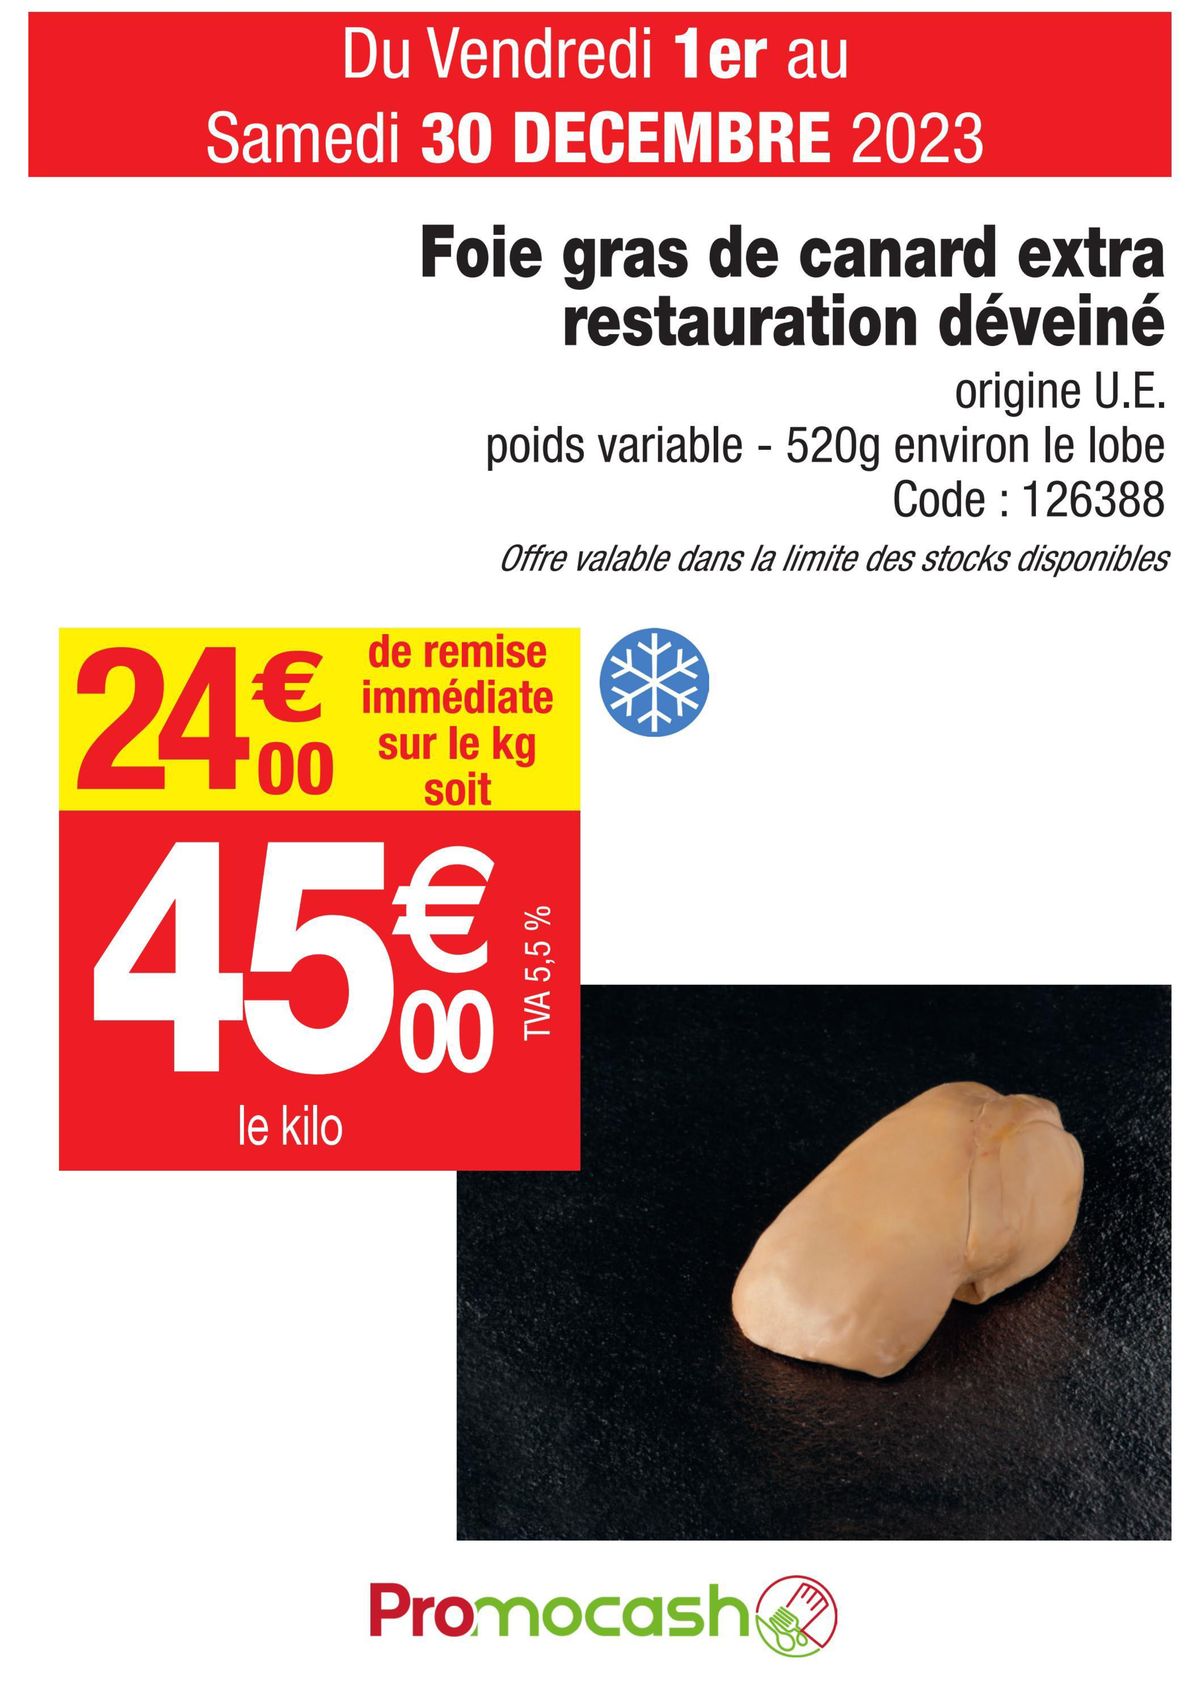 Catalogue Foie gras de canard extra restauration déveiné, page 00001